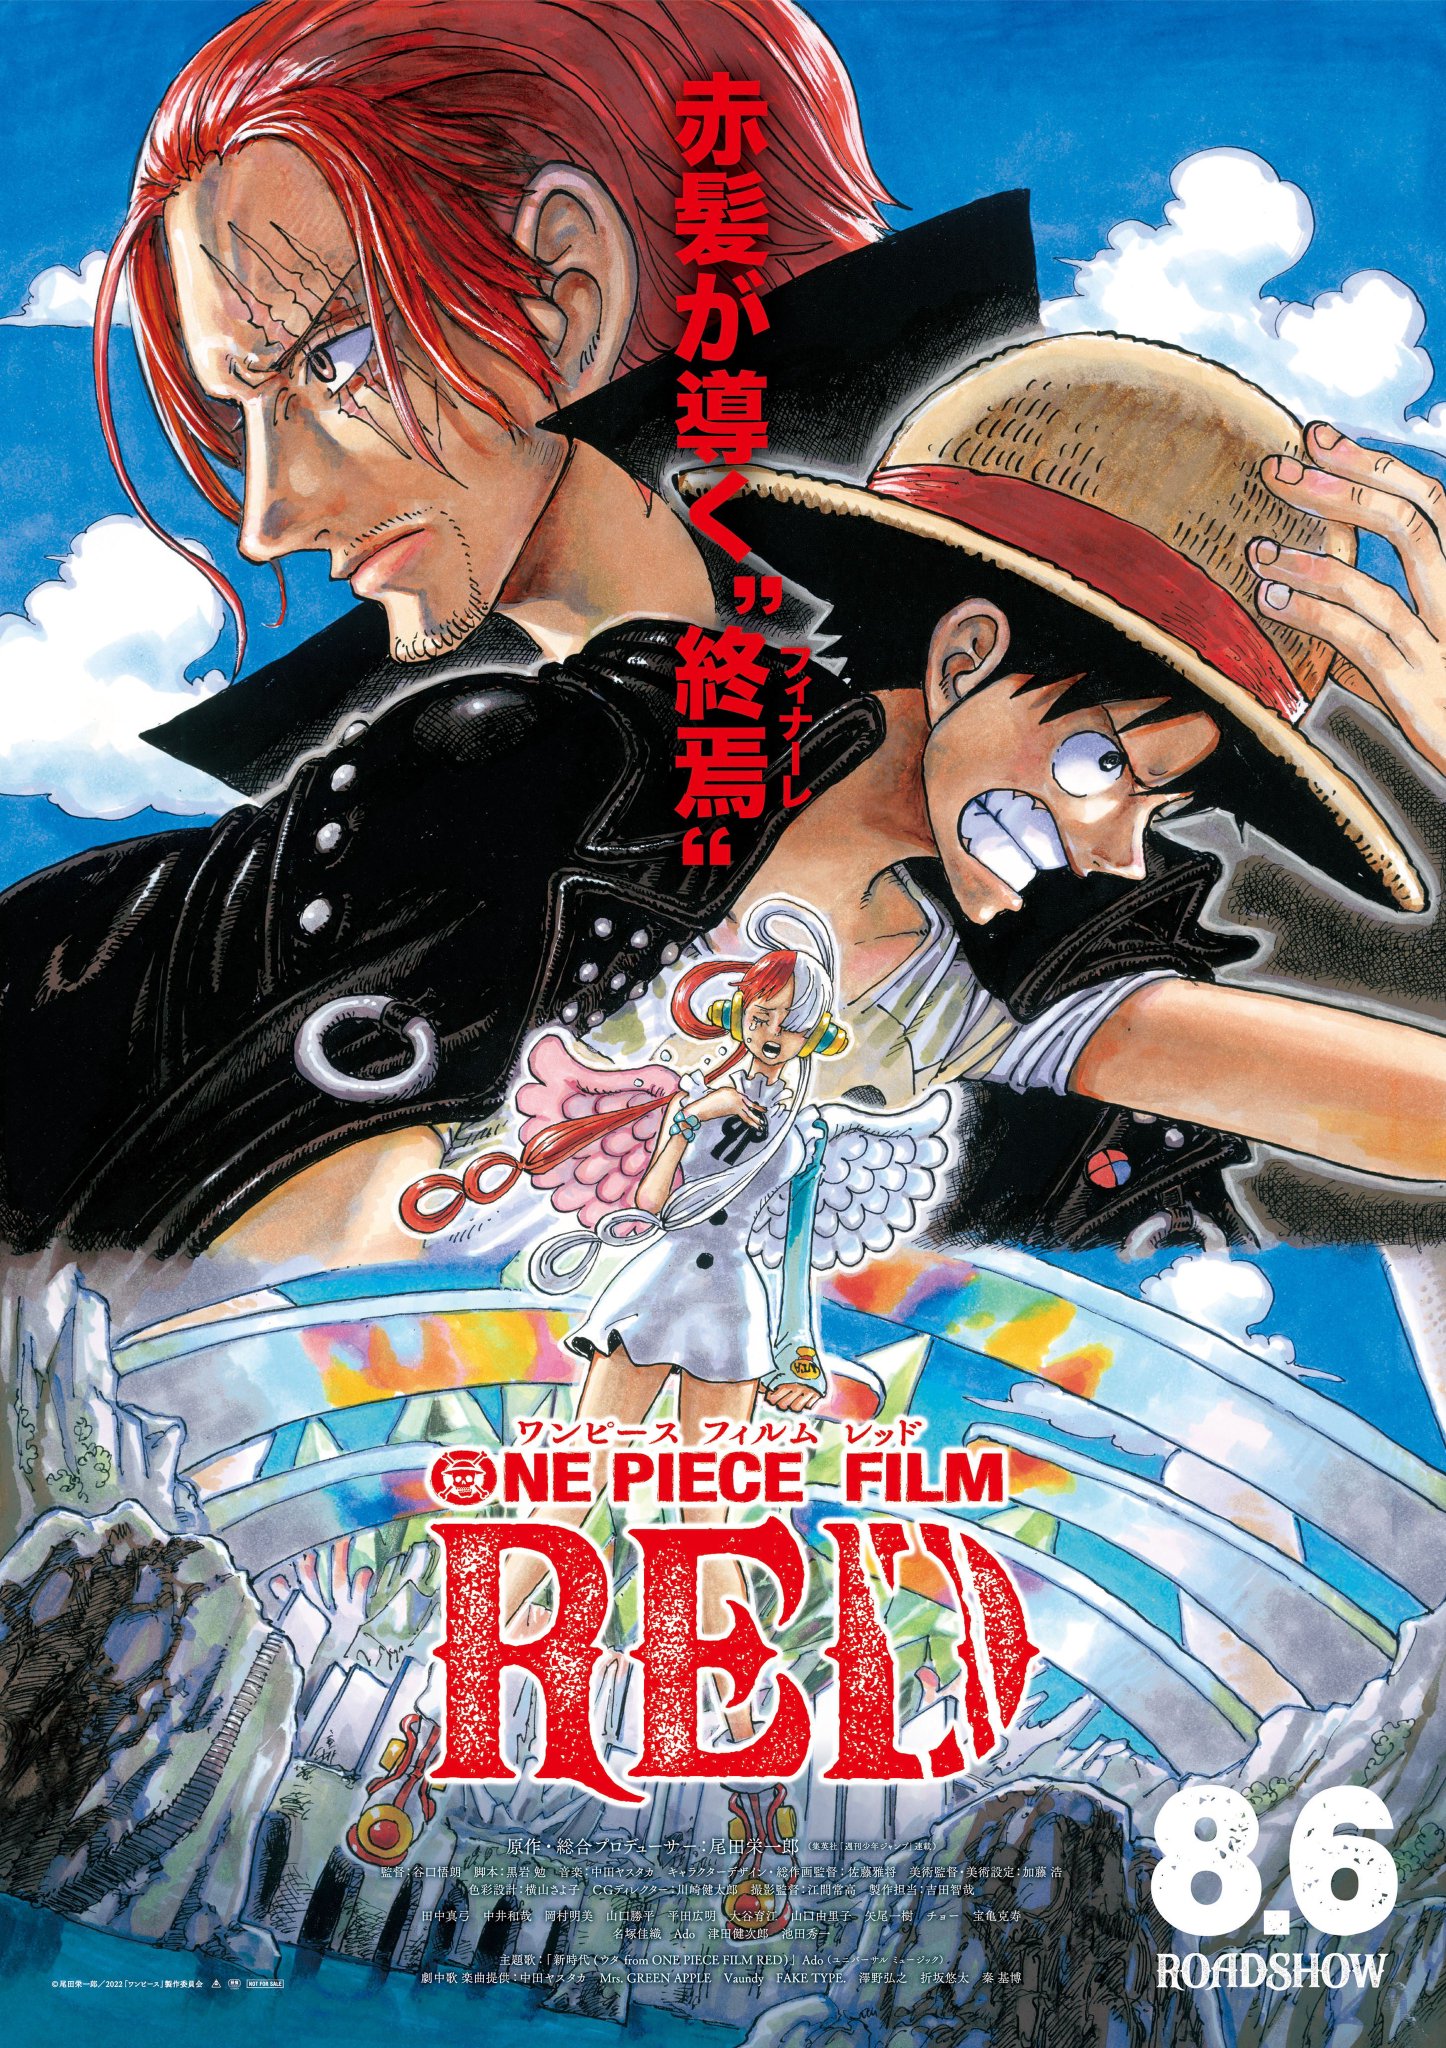 فيلم ون بيس ريد مترجم One Piece Red